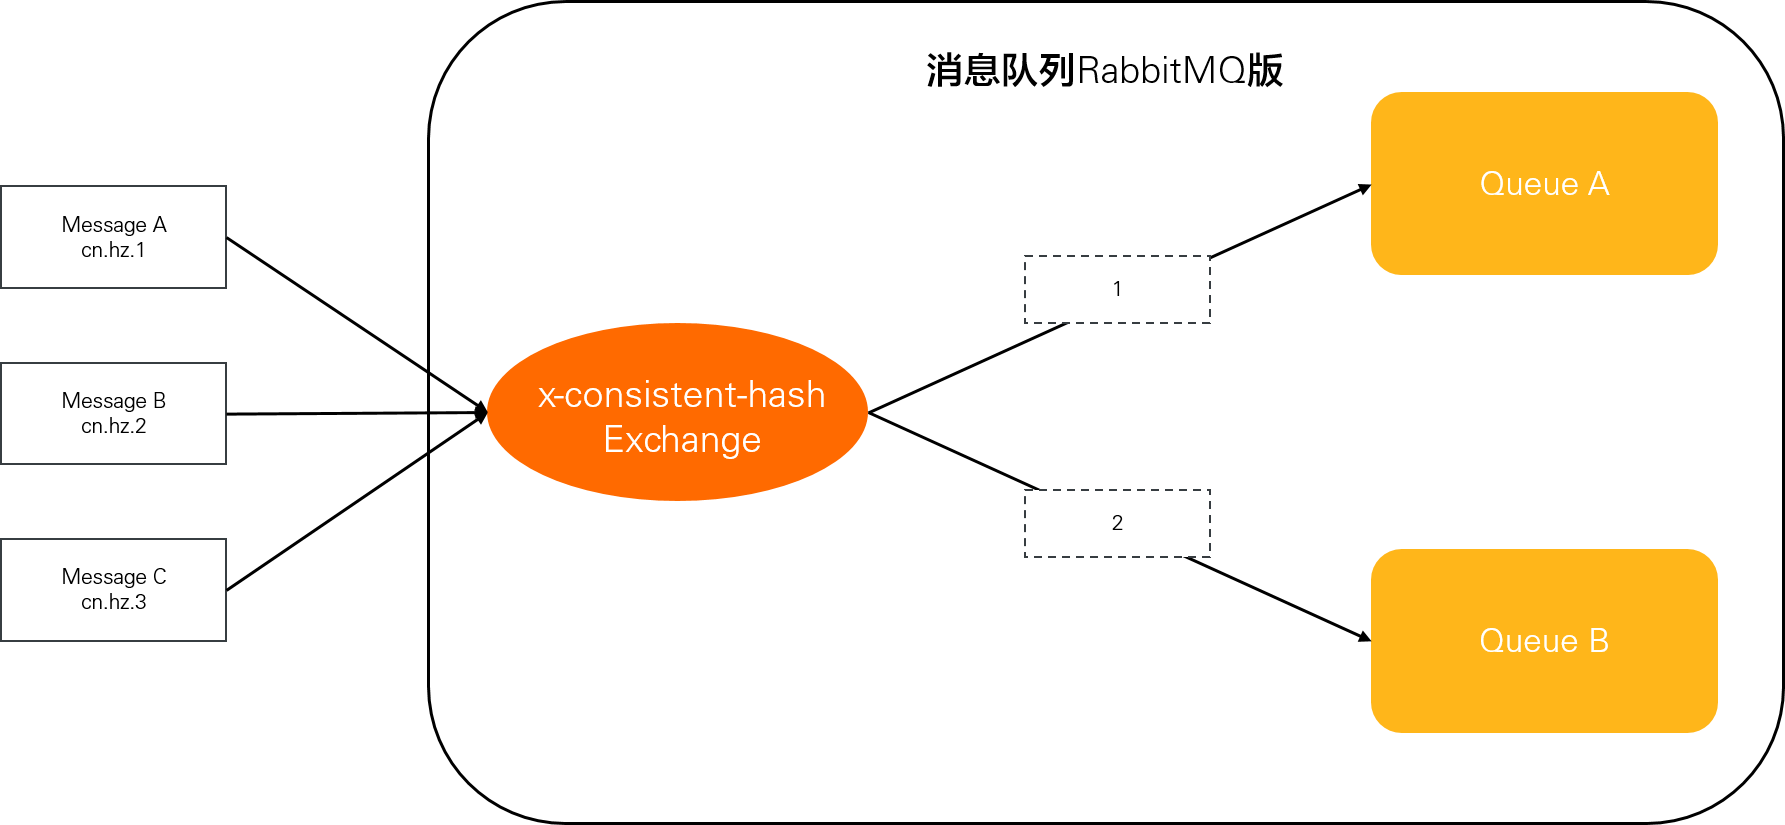 x-consistent-hash